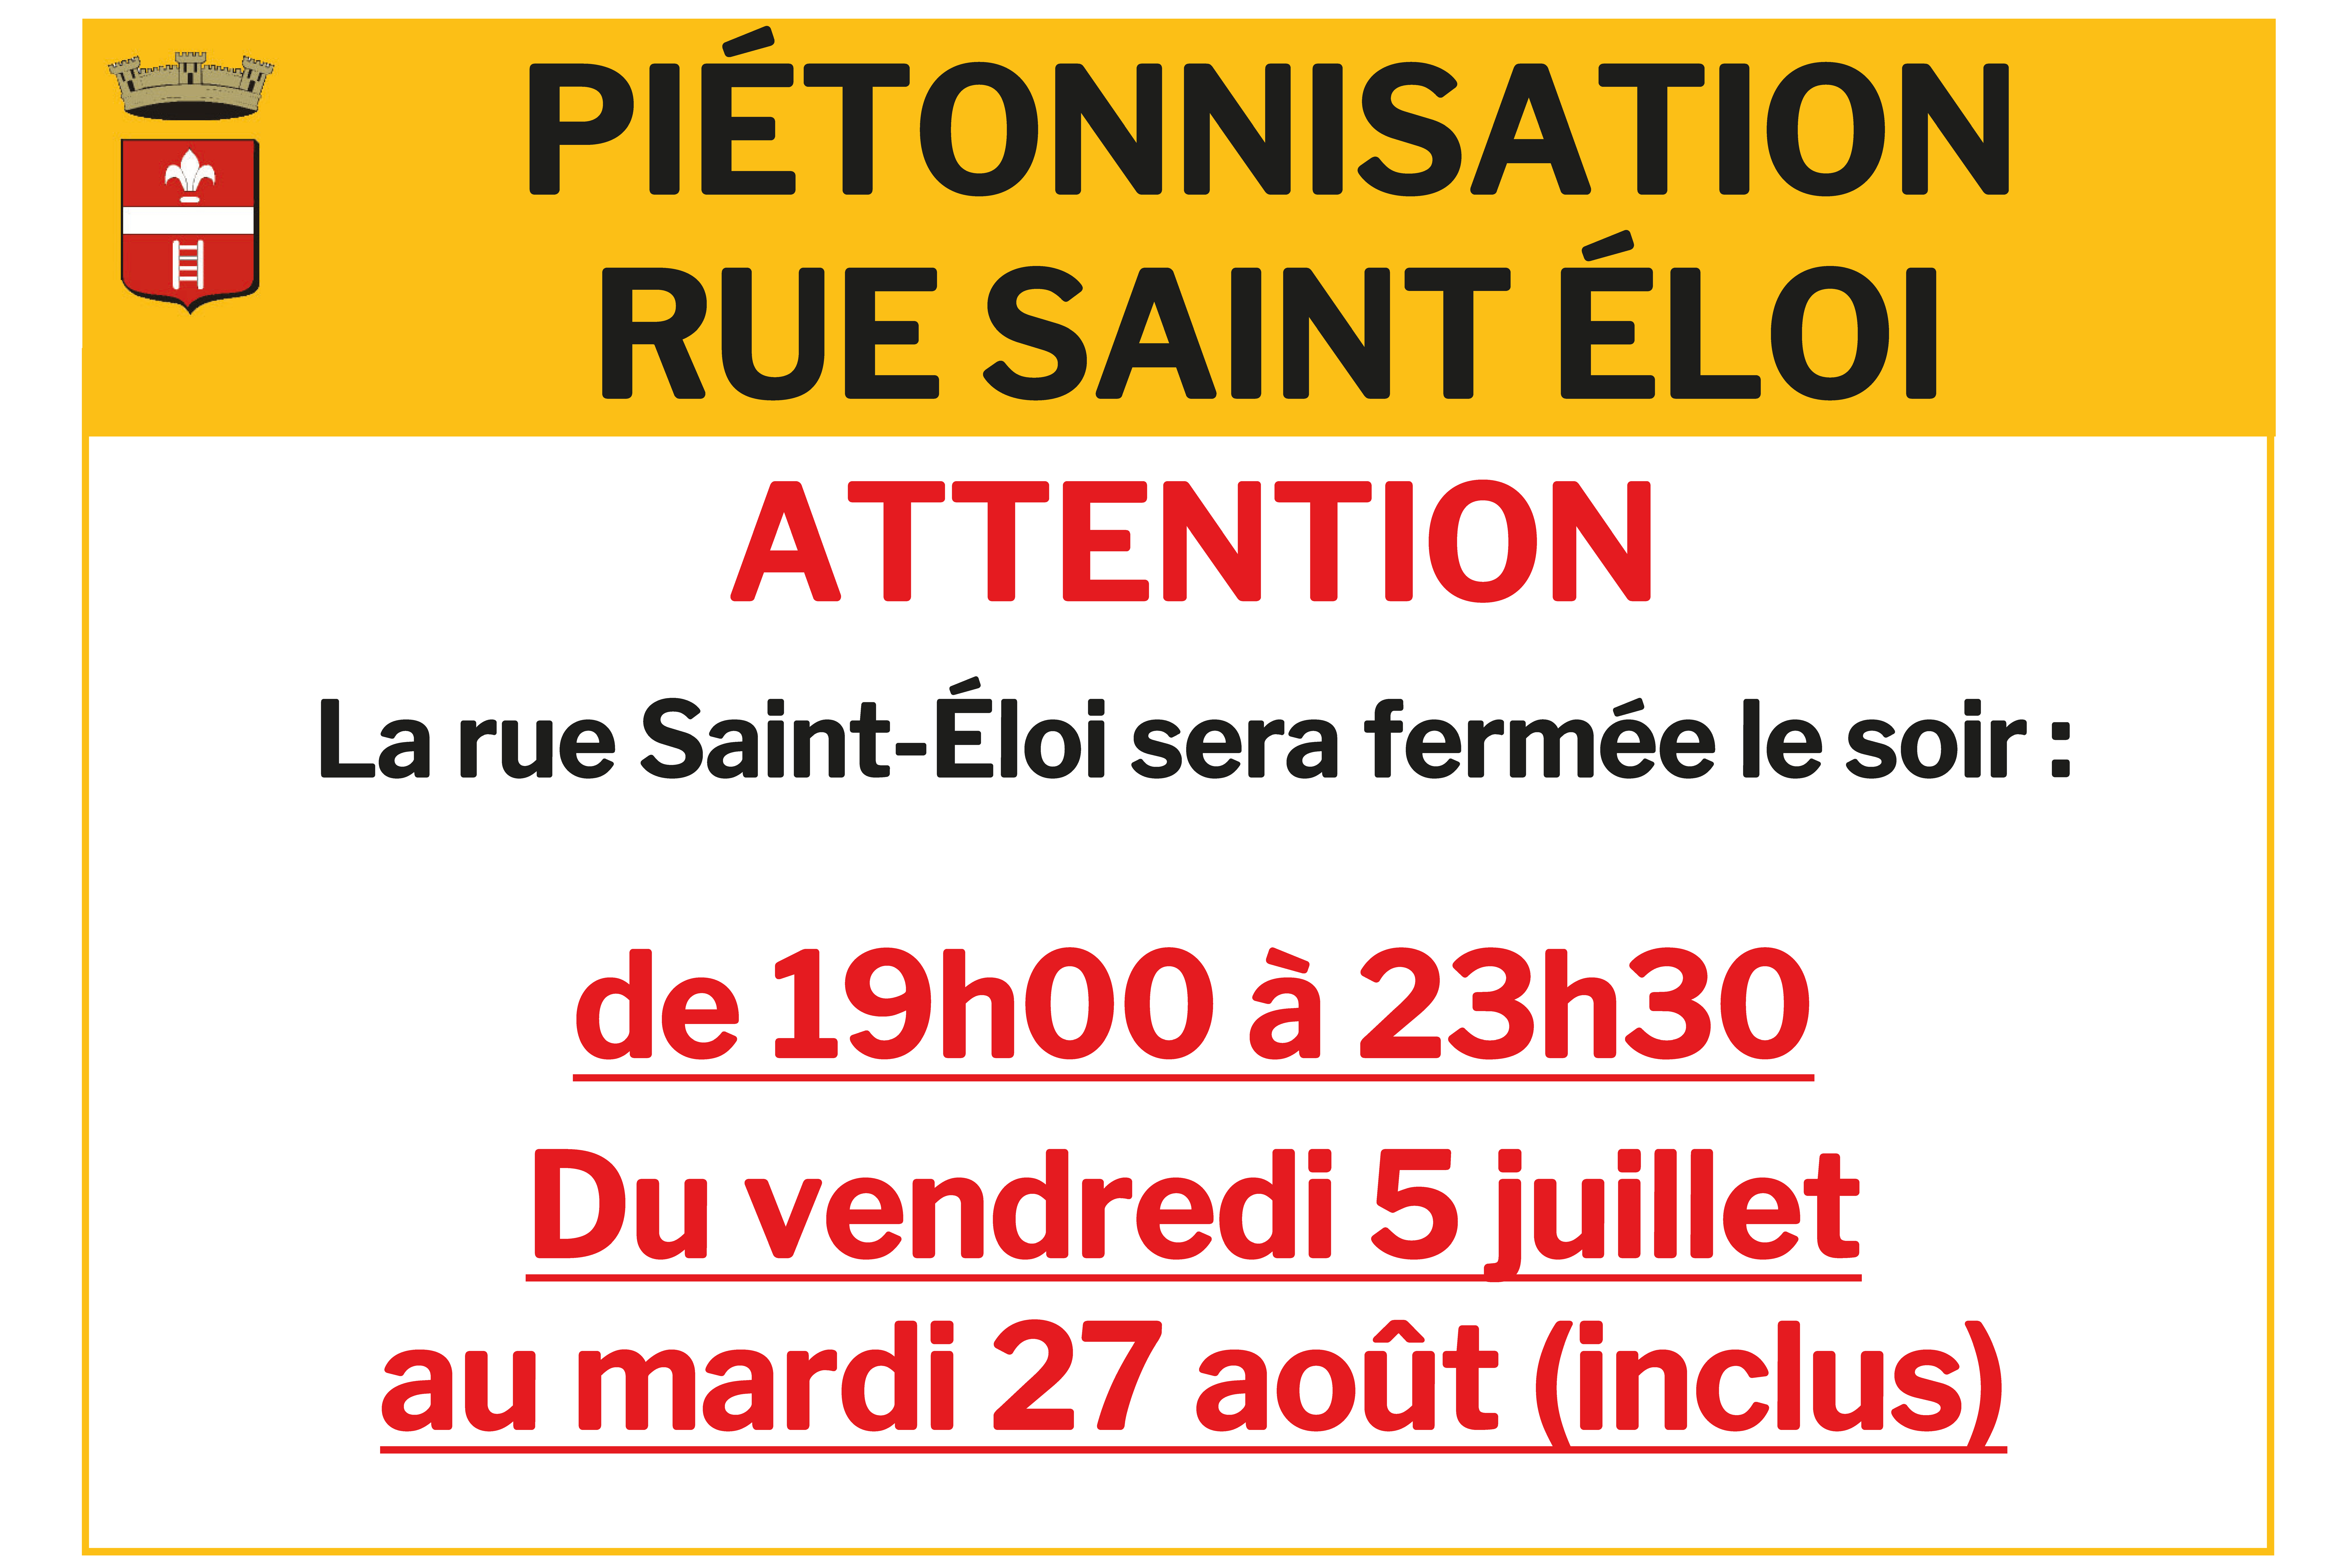 Piétonnisation rue Saint-Eloi